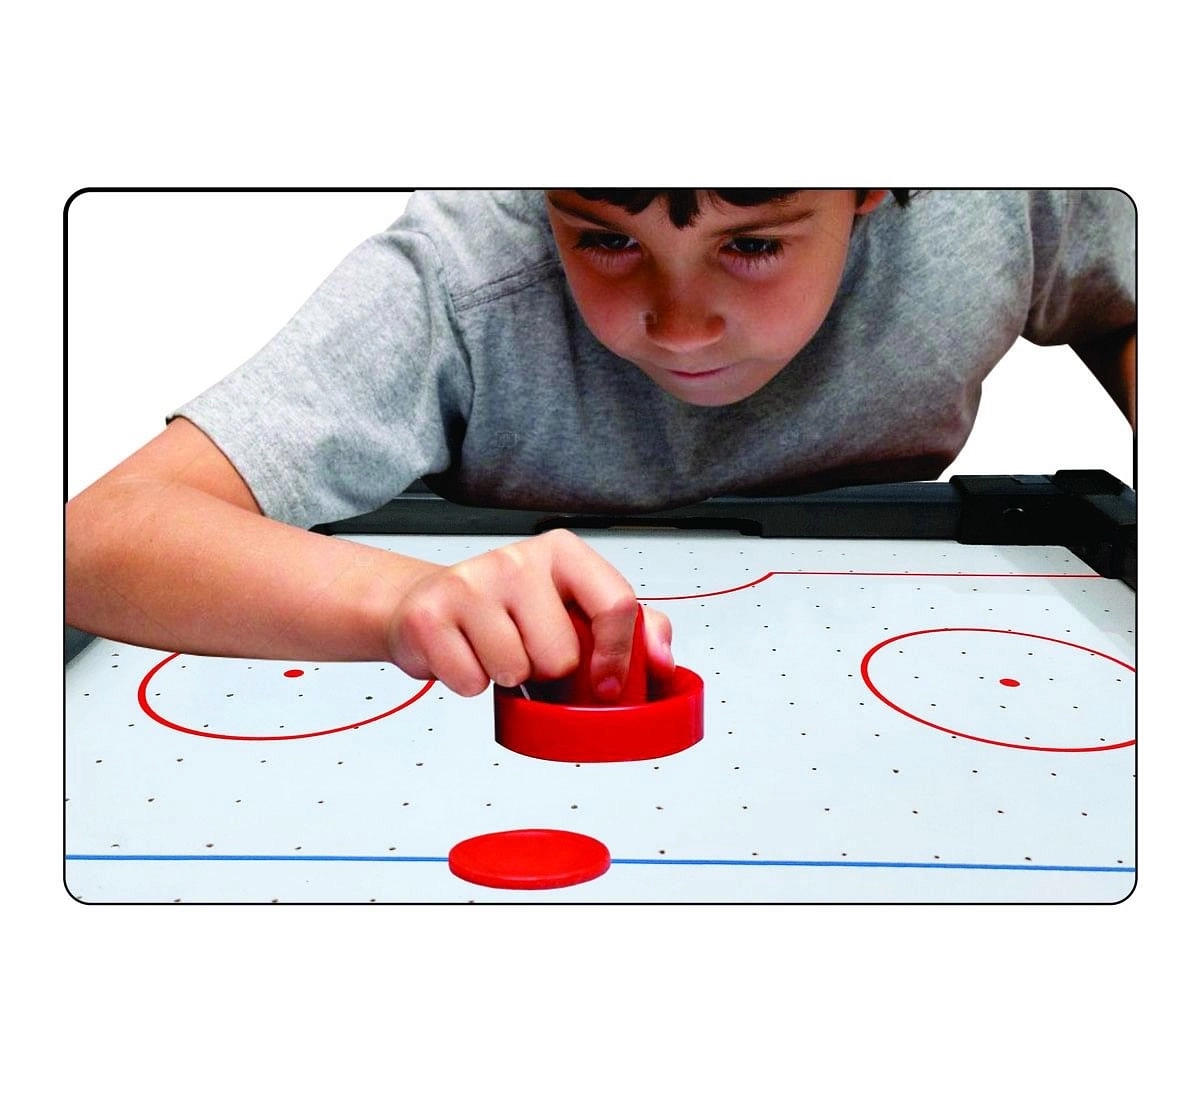 Hamleys Air Hockey Table - Endless Fun for Kids, Multicolour, 3Y+